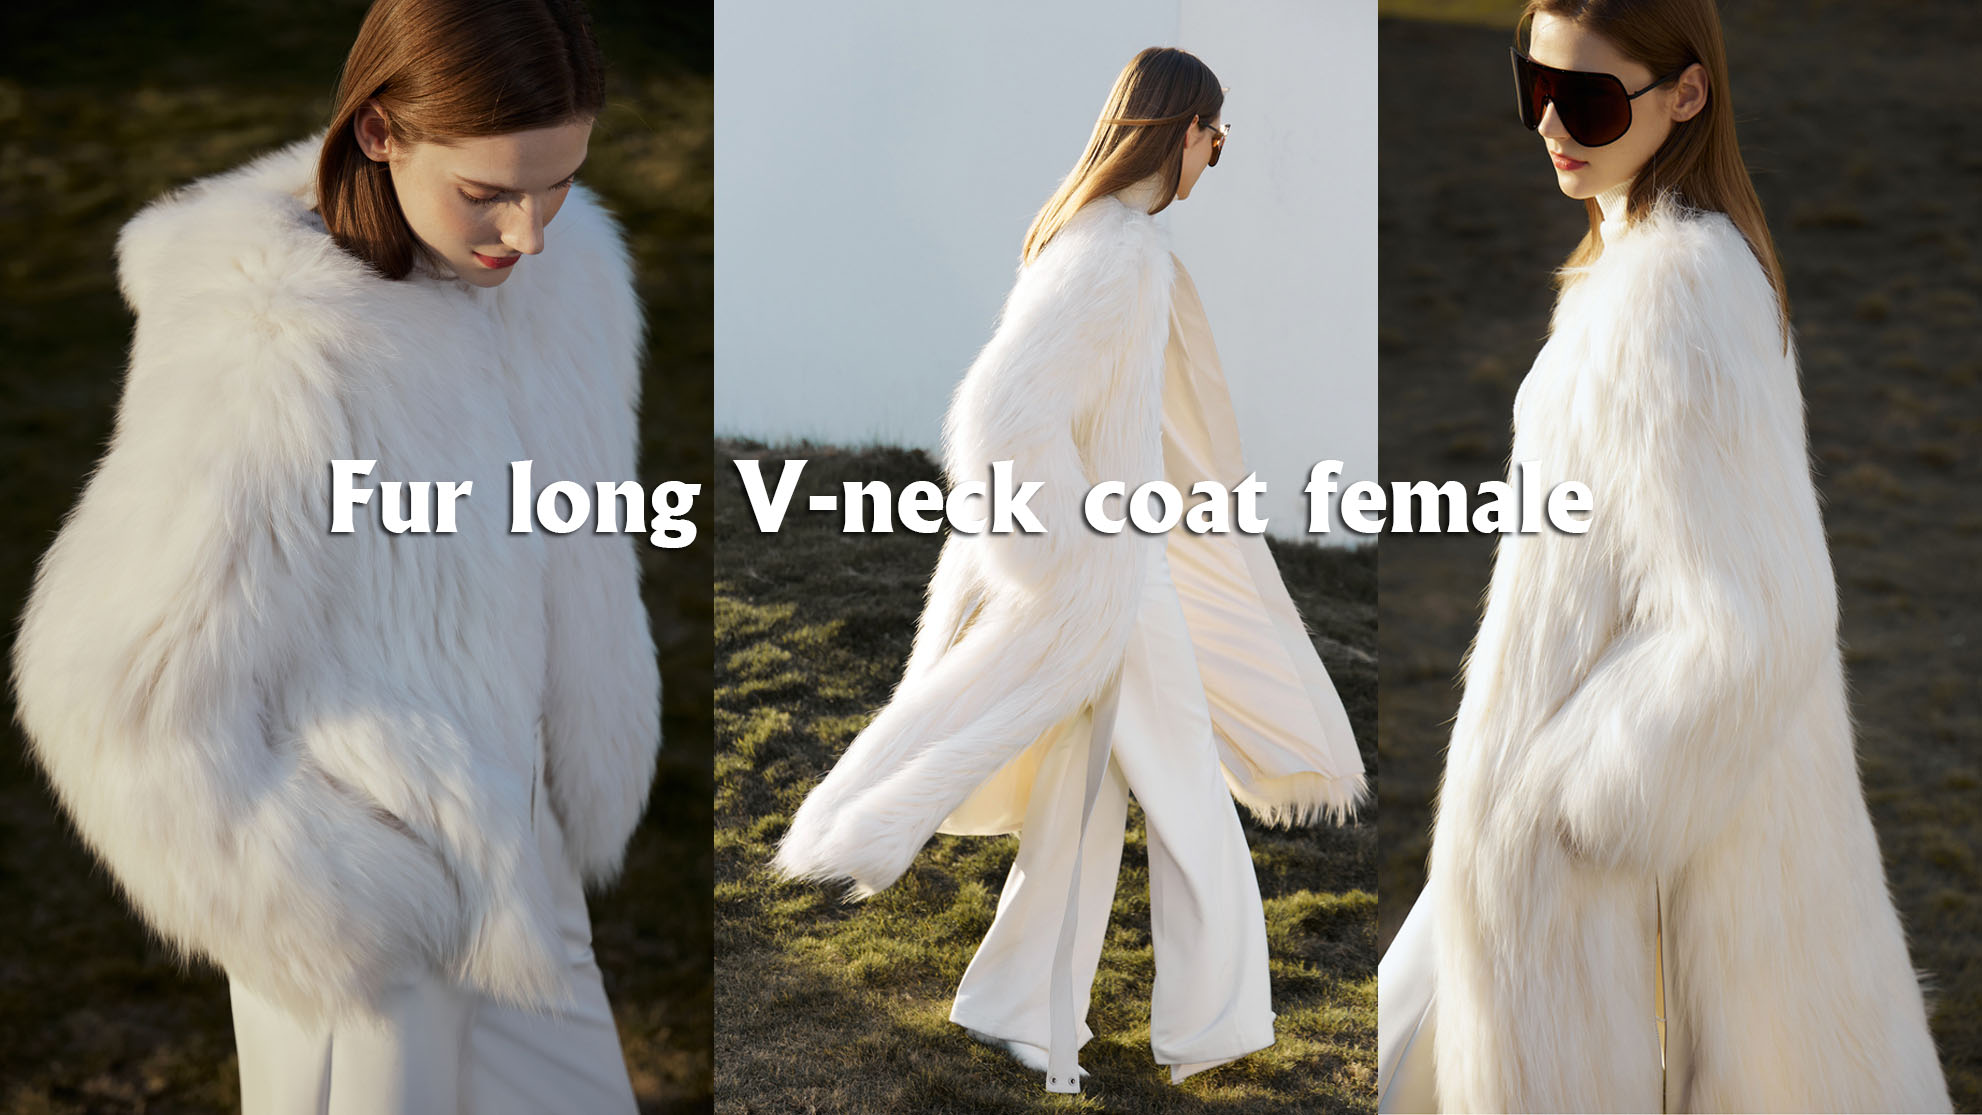 Fur long V-neck coat ladies